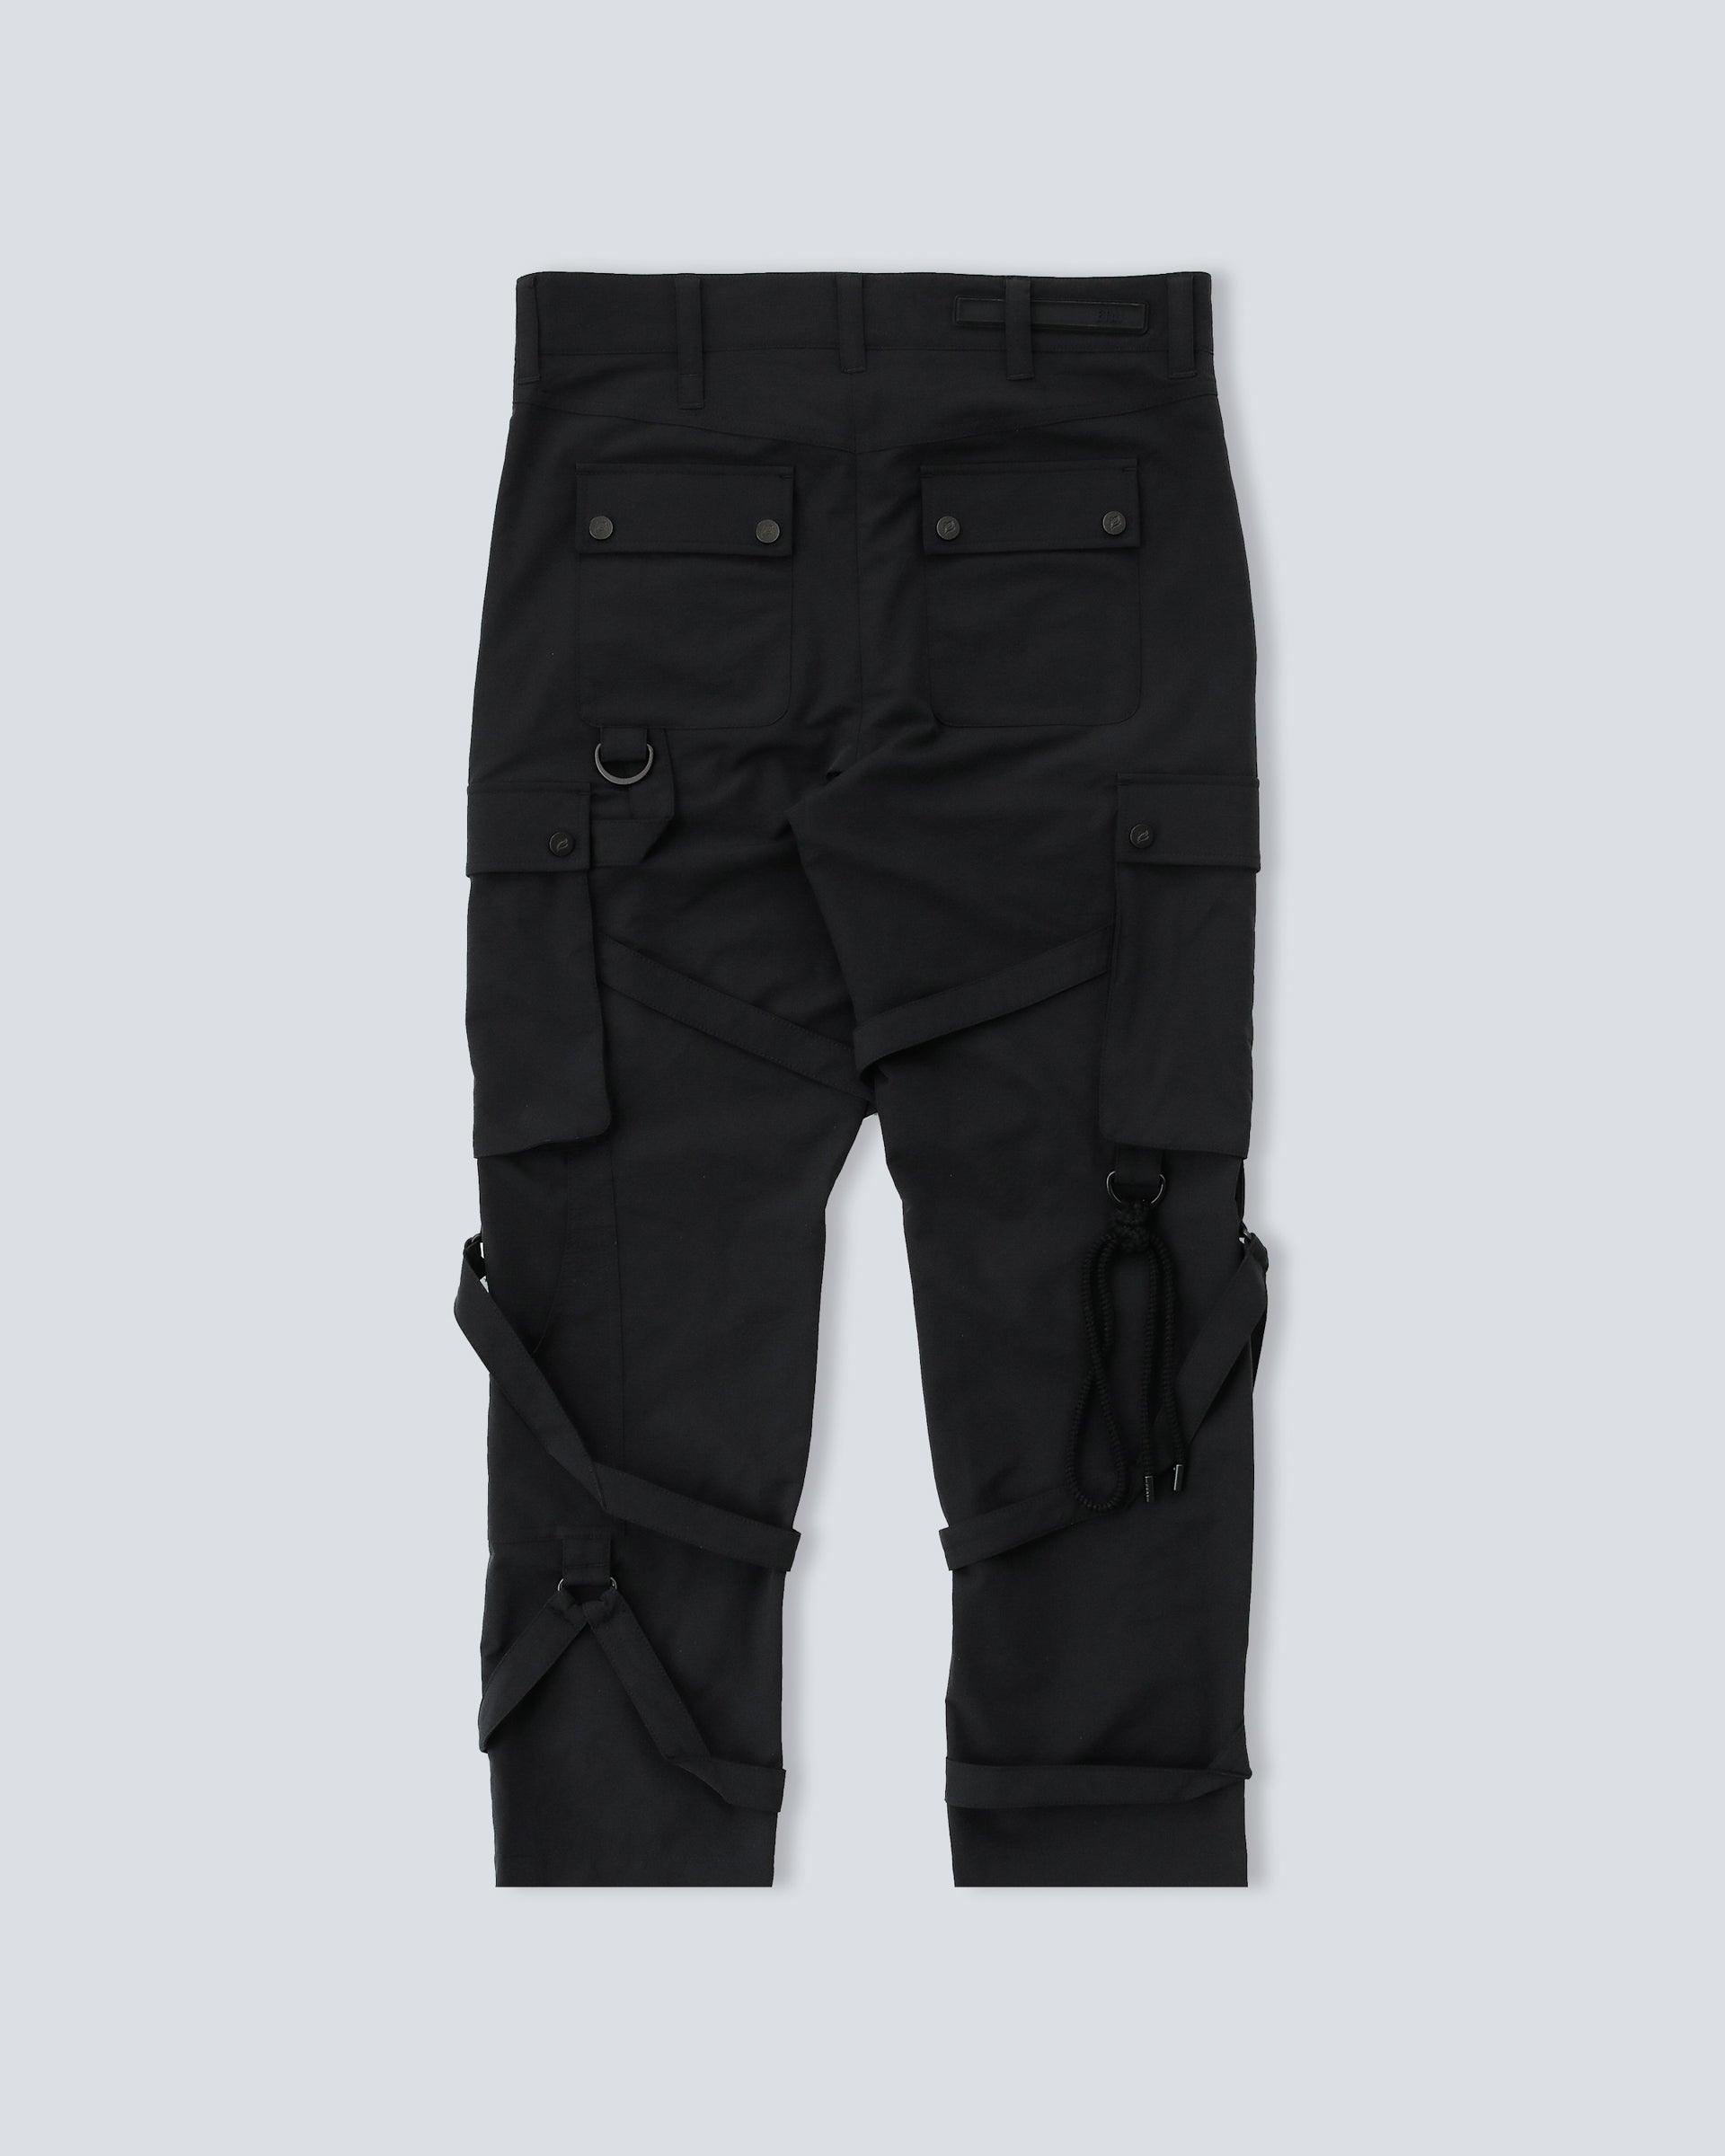 Multi-Strap Cargo Pants - Black - ETAI etaila.com